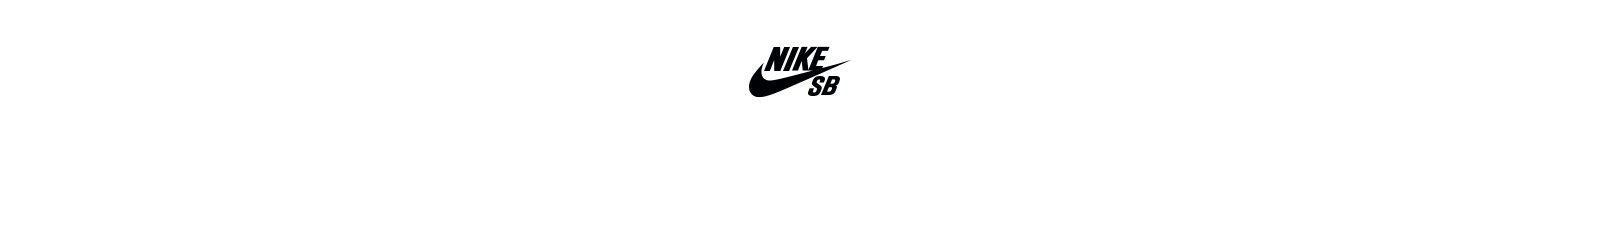 Pastel Nike Logo - Nike SB. Inside Nike Skateboarding. Nike.com